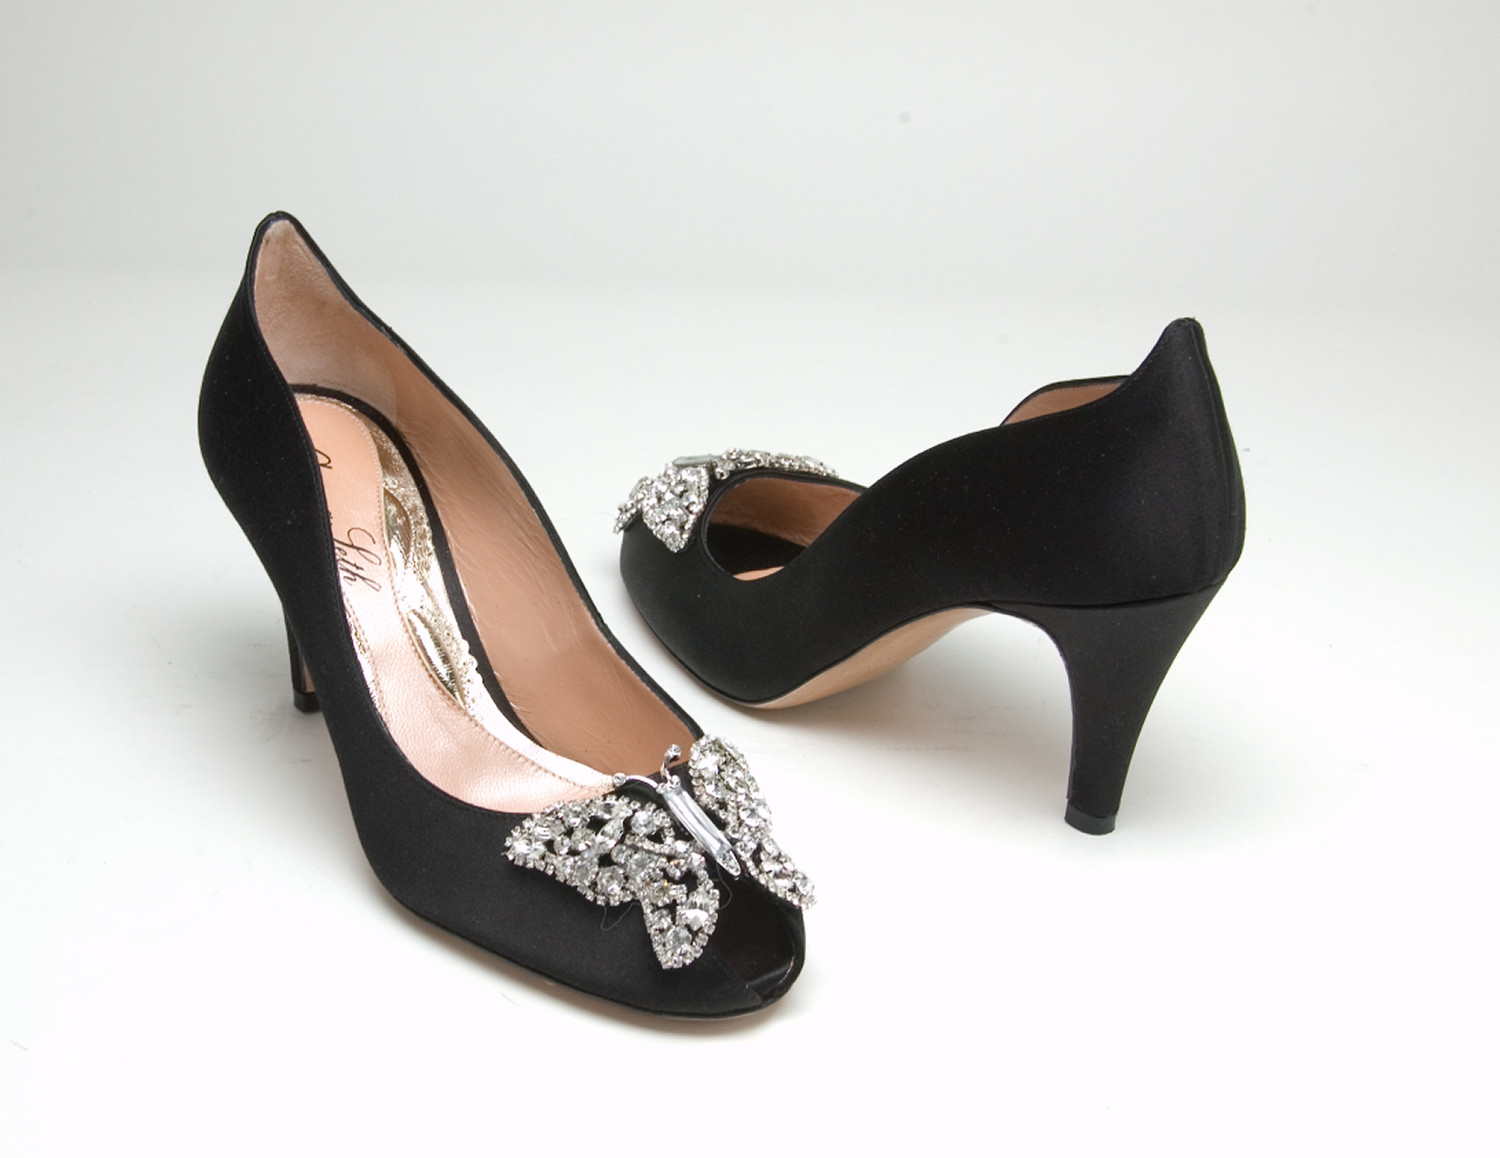 AS151 Farfalla Kitten Heel Black Wedding Shoes from Aruna Seth